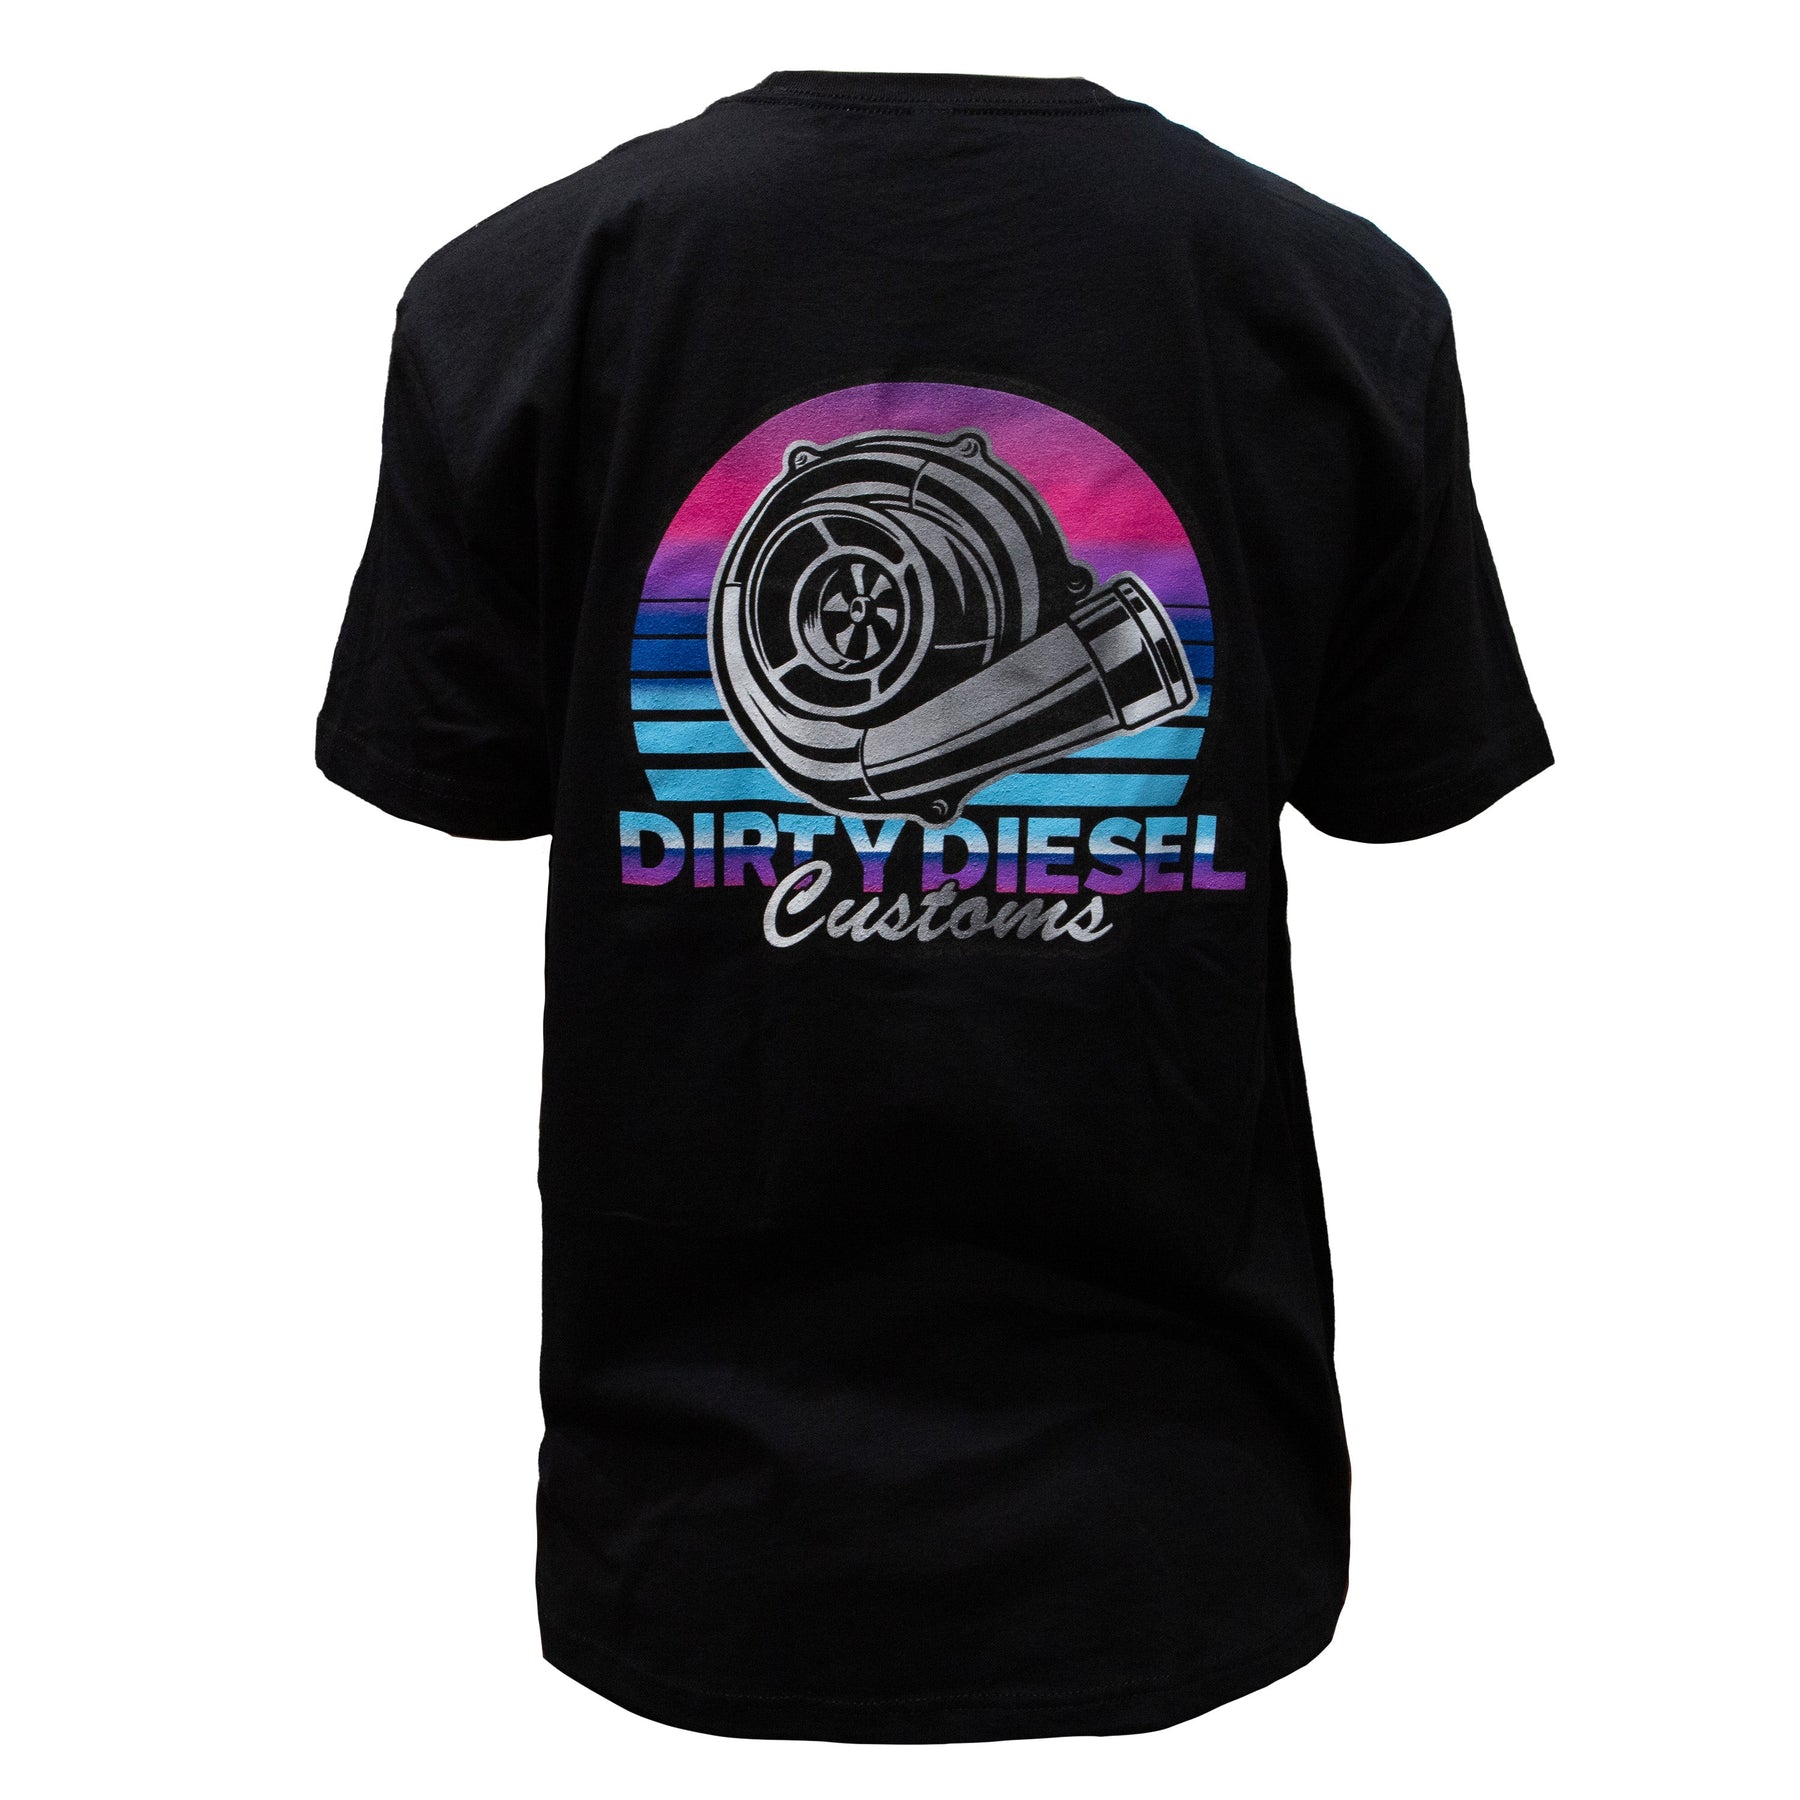 Dirty Diesel Turbski T-Shirt-T-Shirt-Dirty Diesel Customs-Dirty Diesel Customs